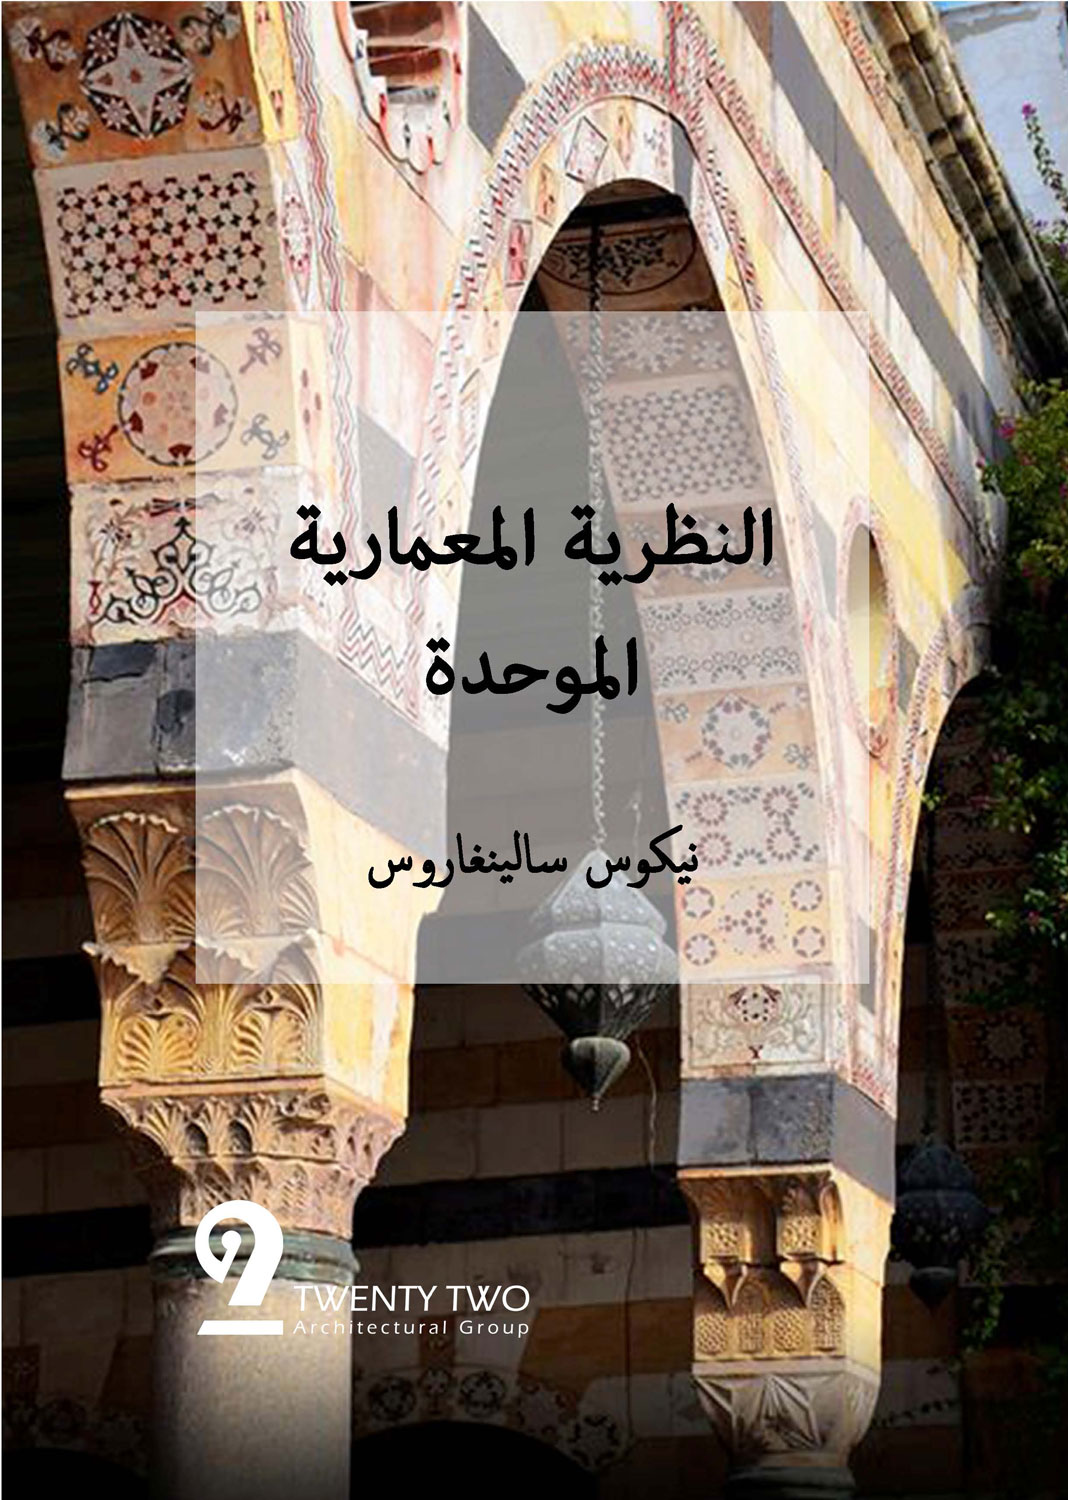 Unified Architectural Theory (Arabic)/النظرية المعمارية الموحدة